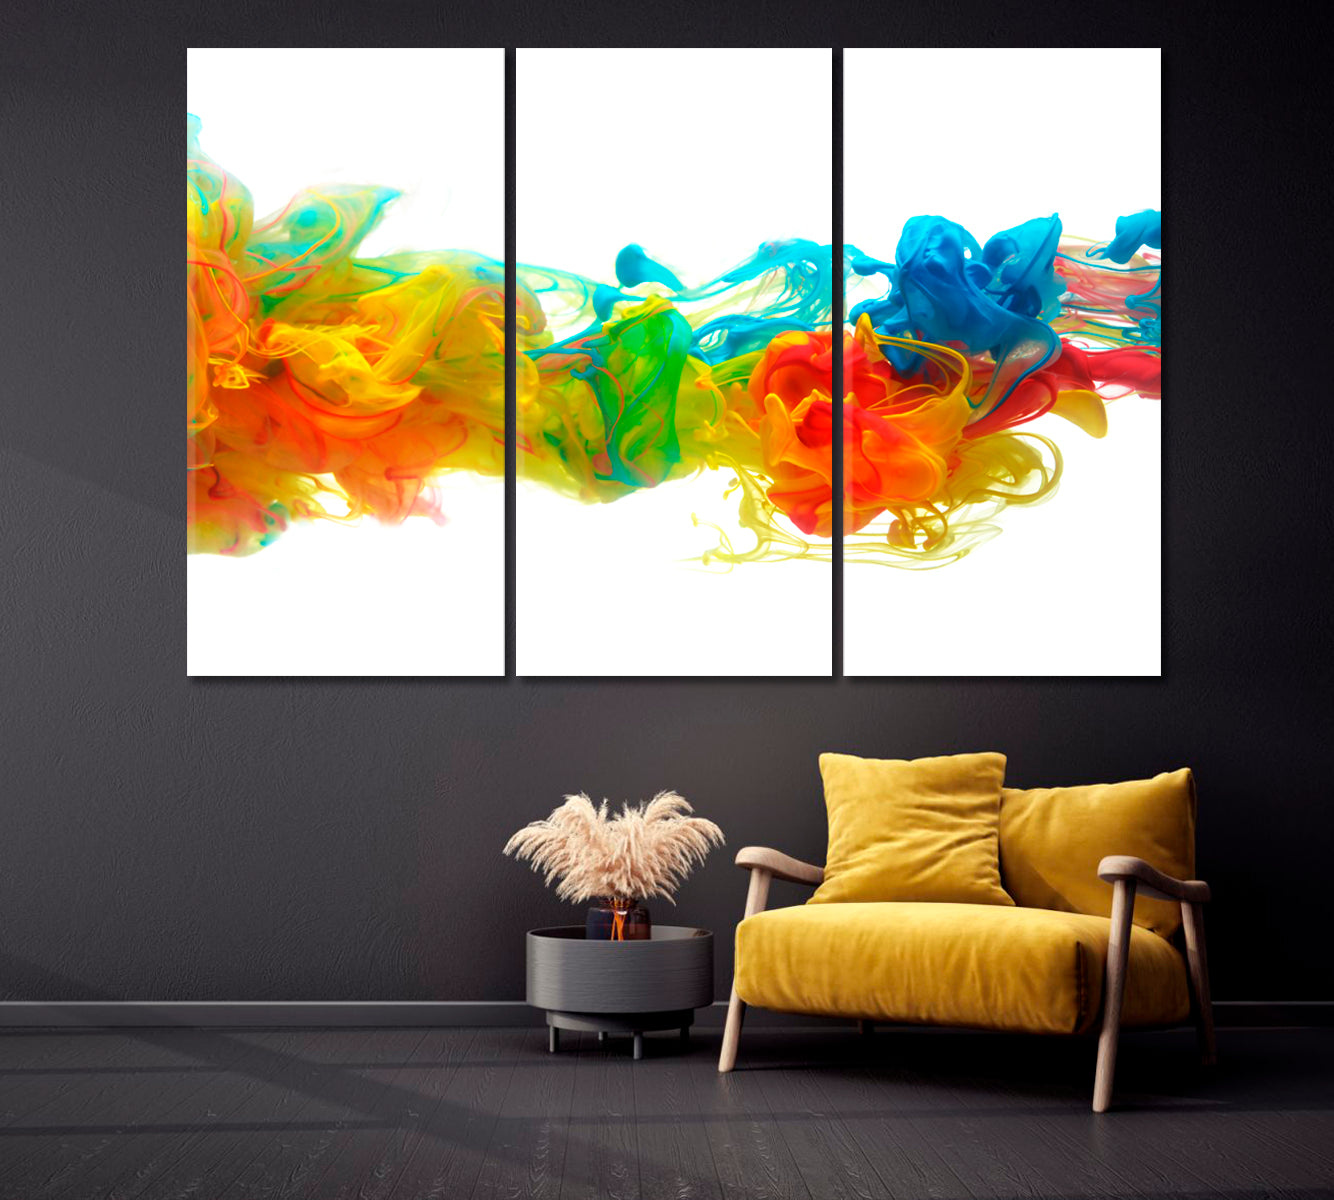 Abstract Colorful Ink Splash Canvas Print-Canvas Print-CetArt-1 Panel-24x16 inches-CetArt